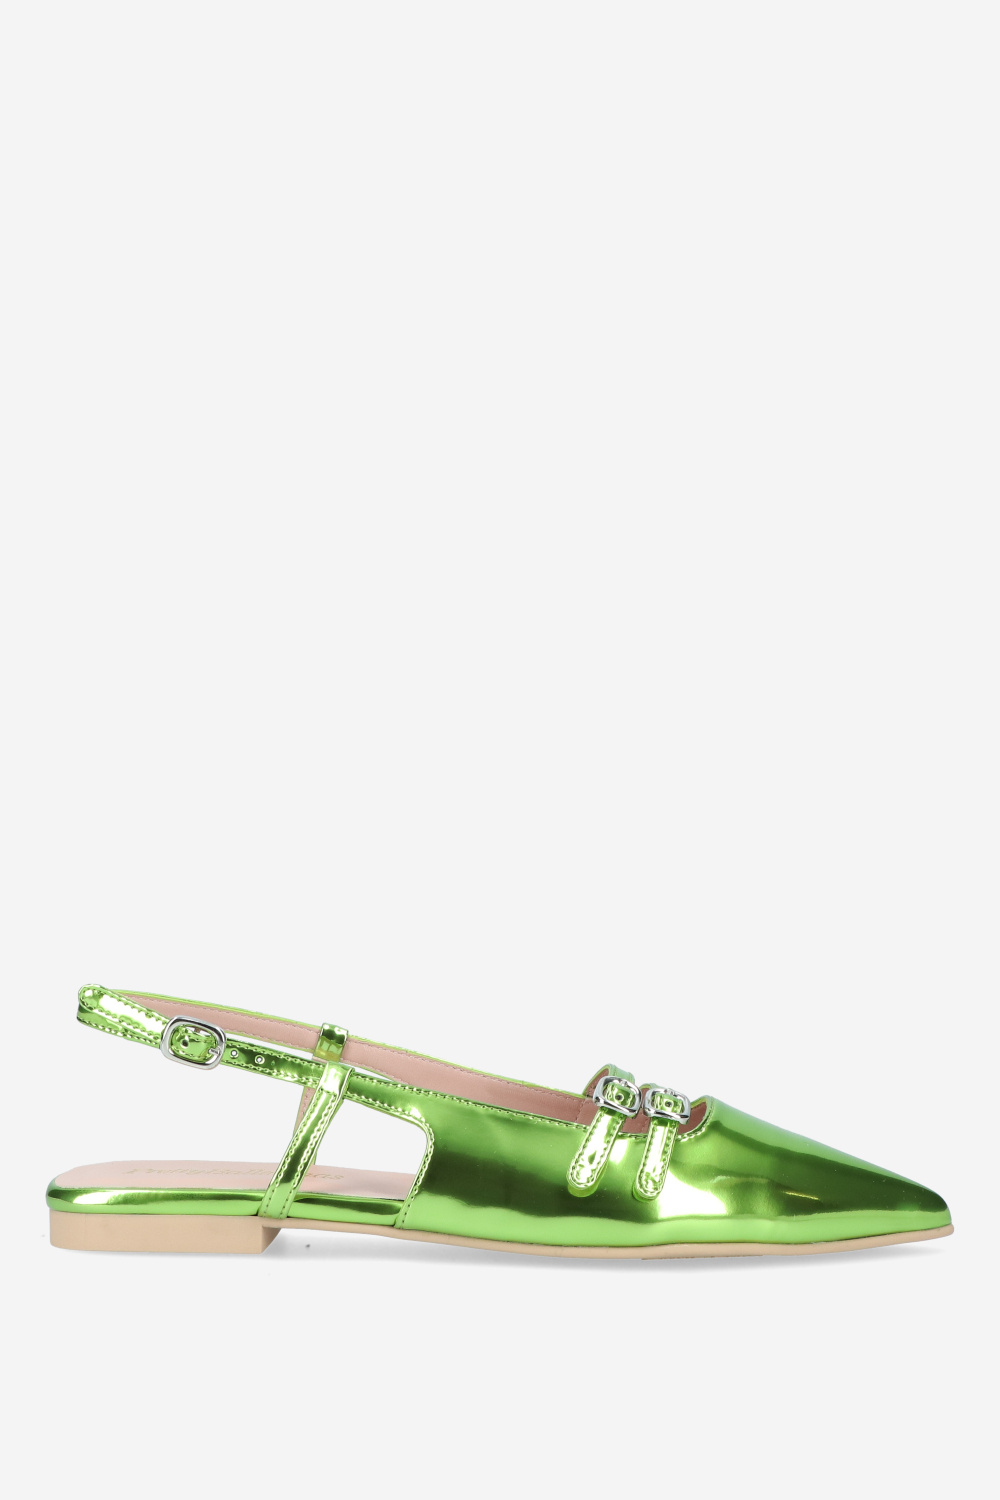 Pretty Ballerinas Flat shoes Green